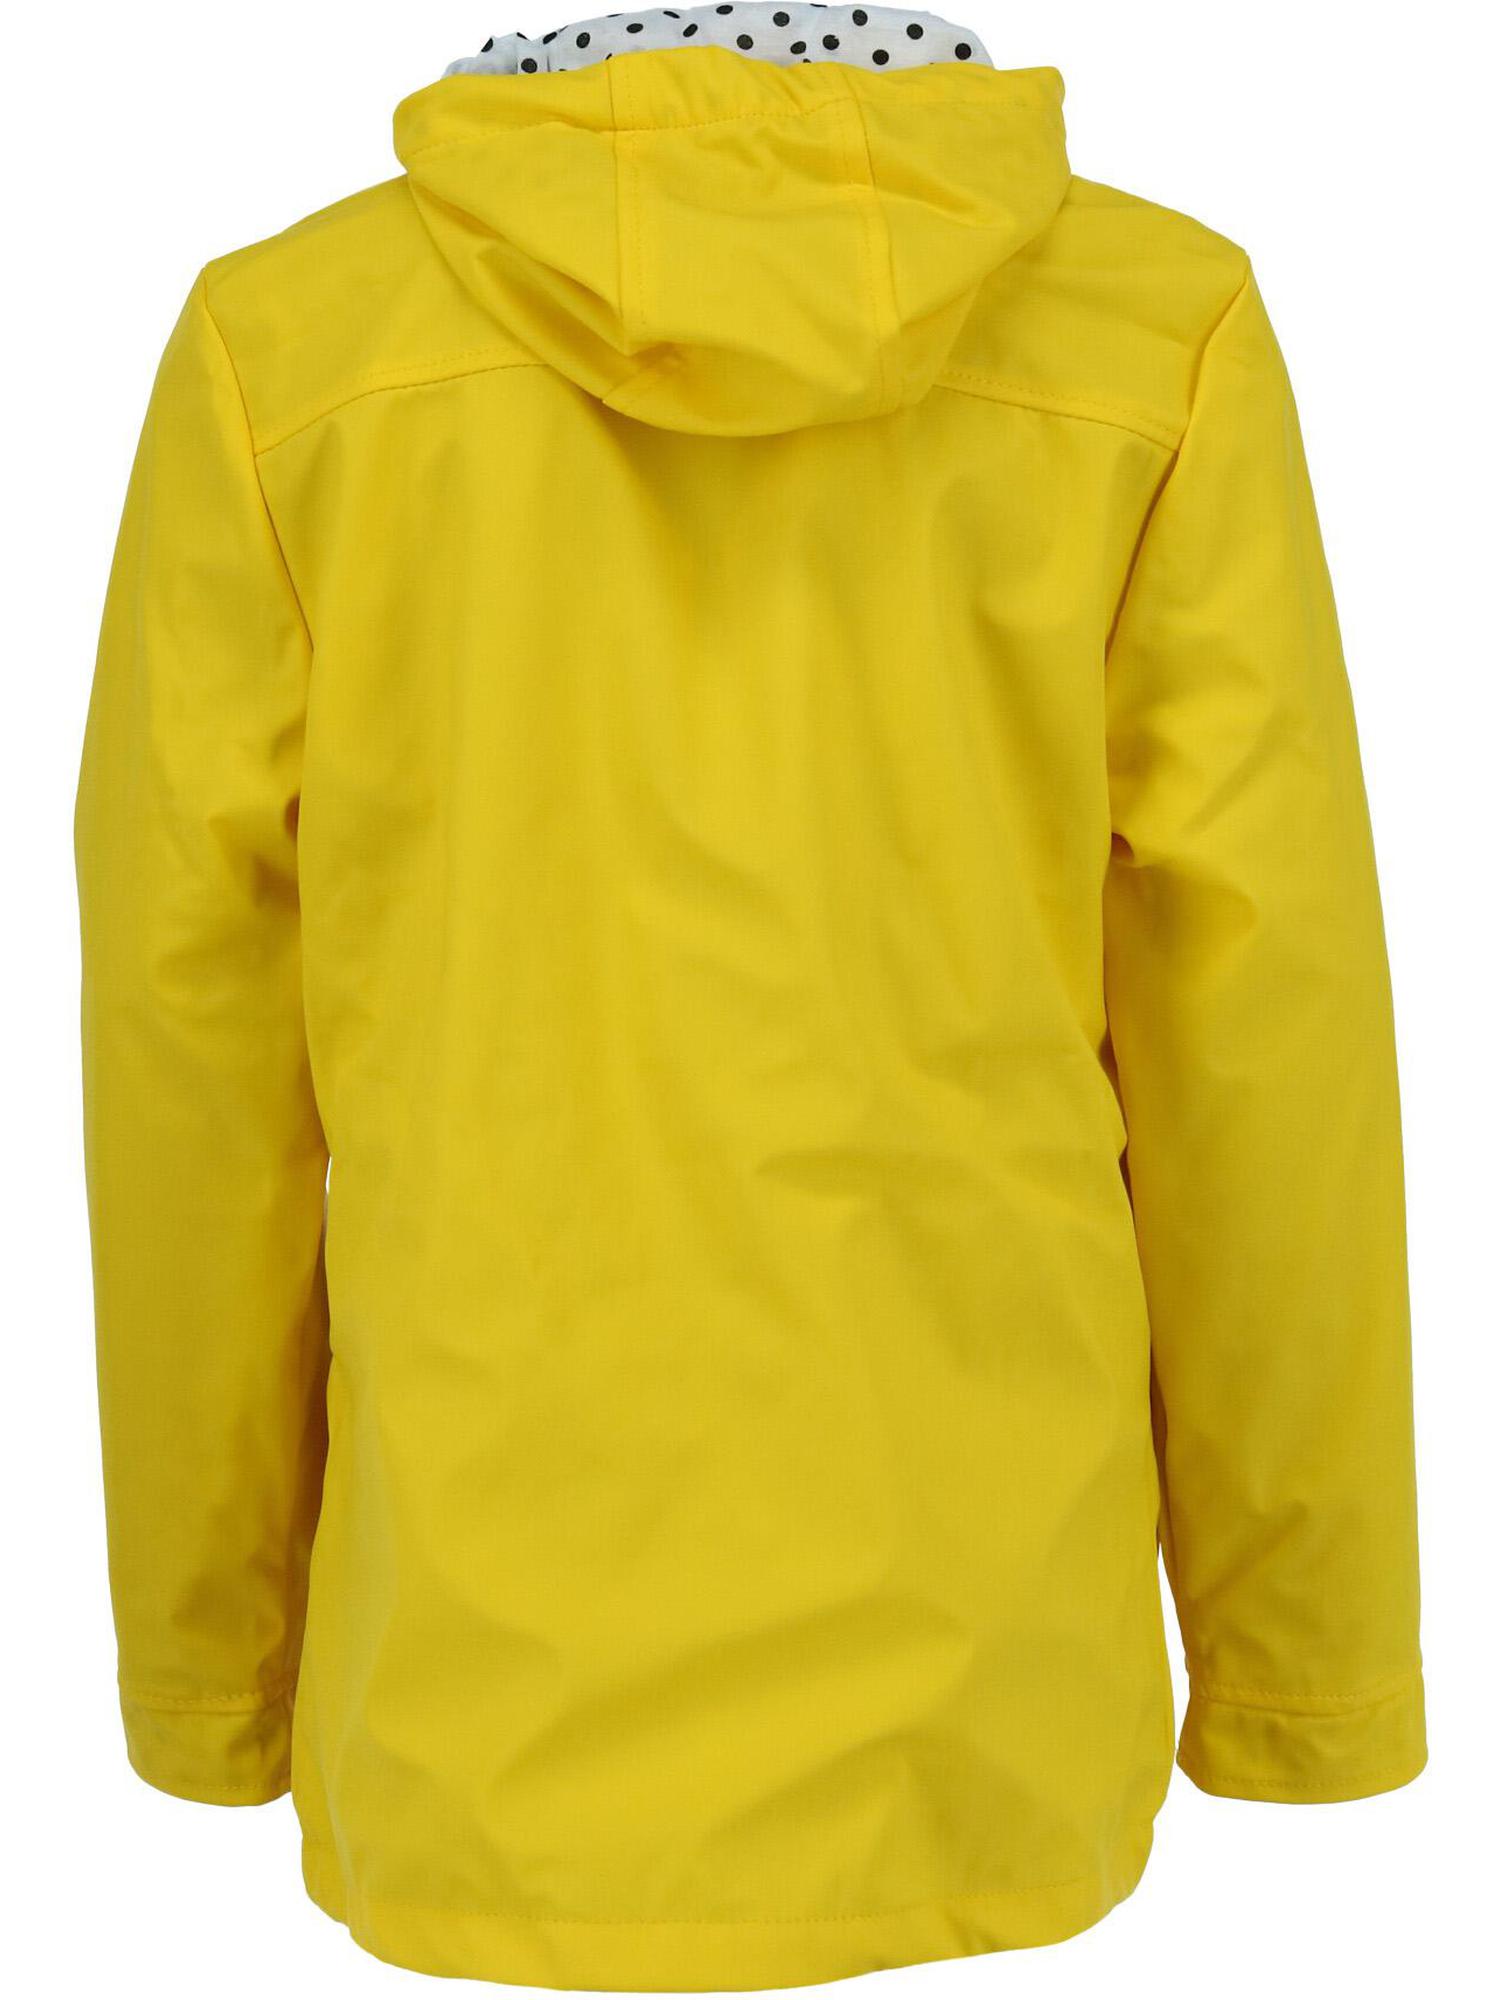 I5 Apparel Kid's Hooded Waxie Toggle Rain Slicker Jacket - image 2 of 4